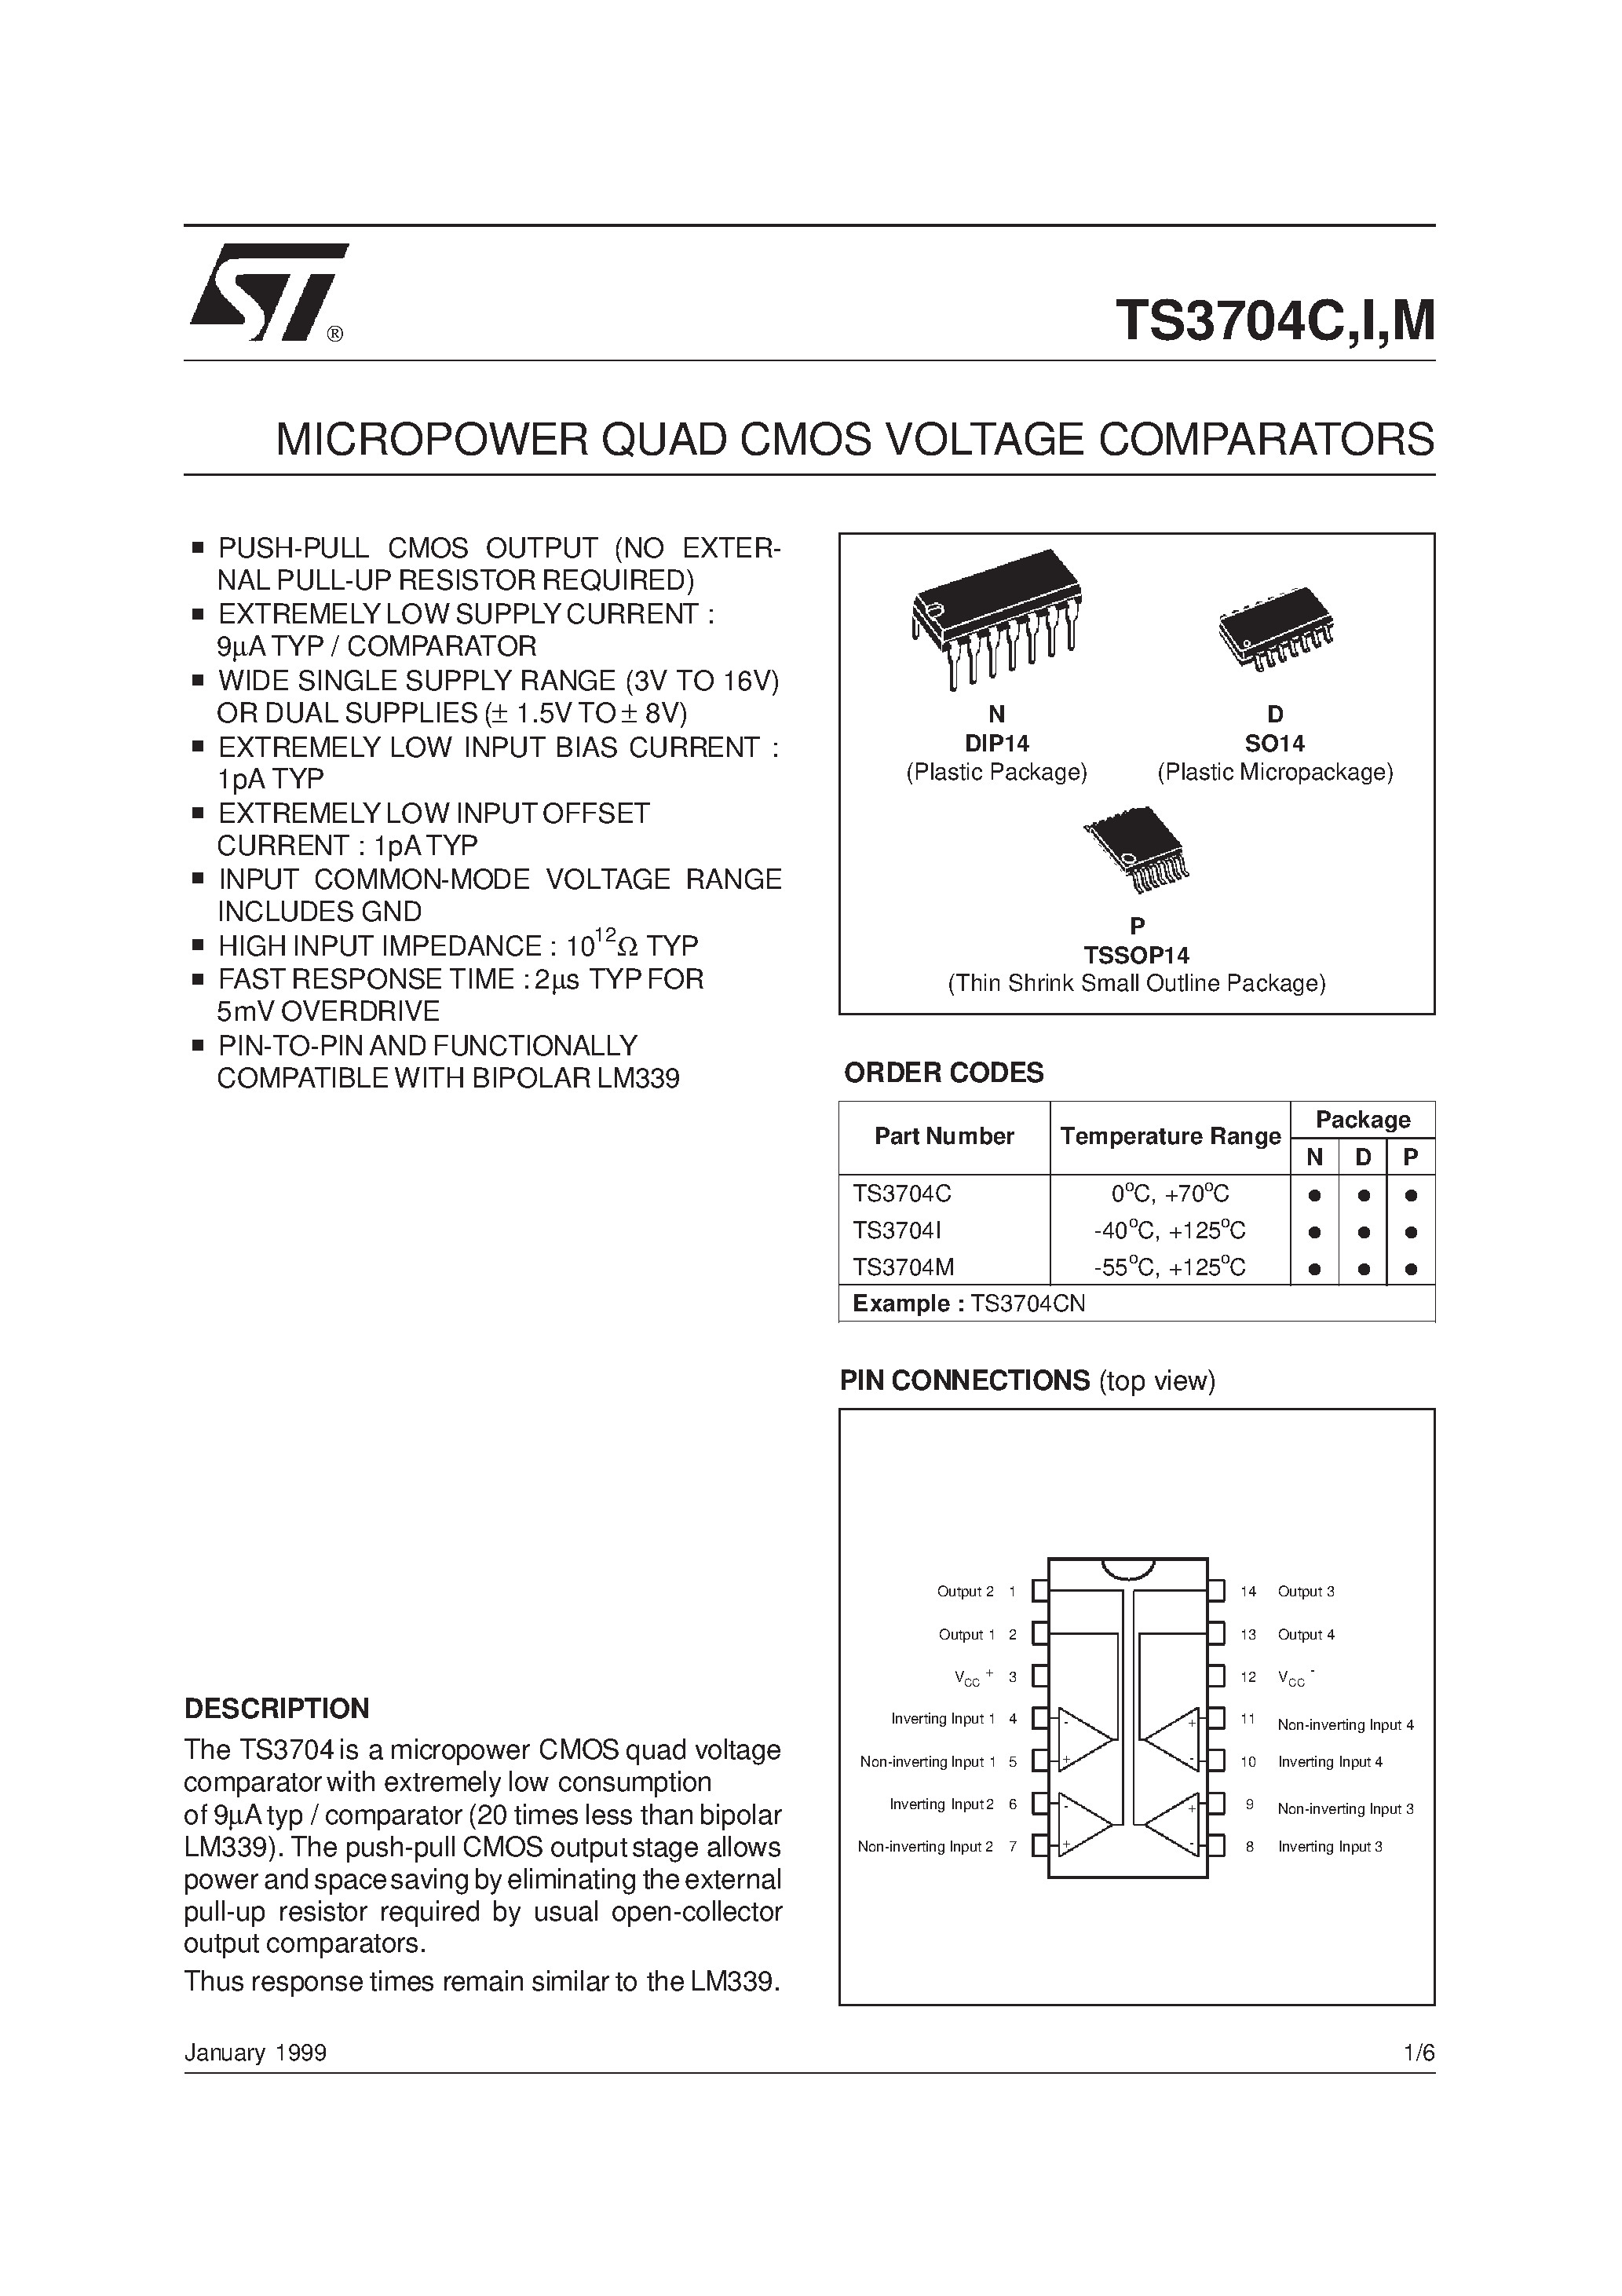 Datasheet TS3704C - MICROPOWER QUAD CMOS VOLTAGE COMPARATORS page 1